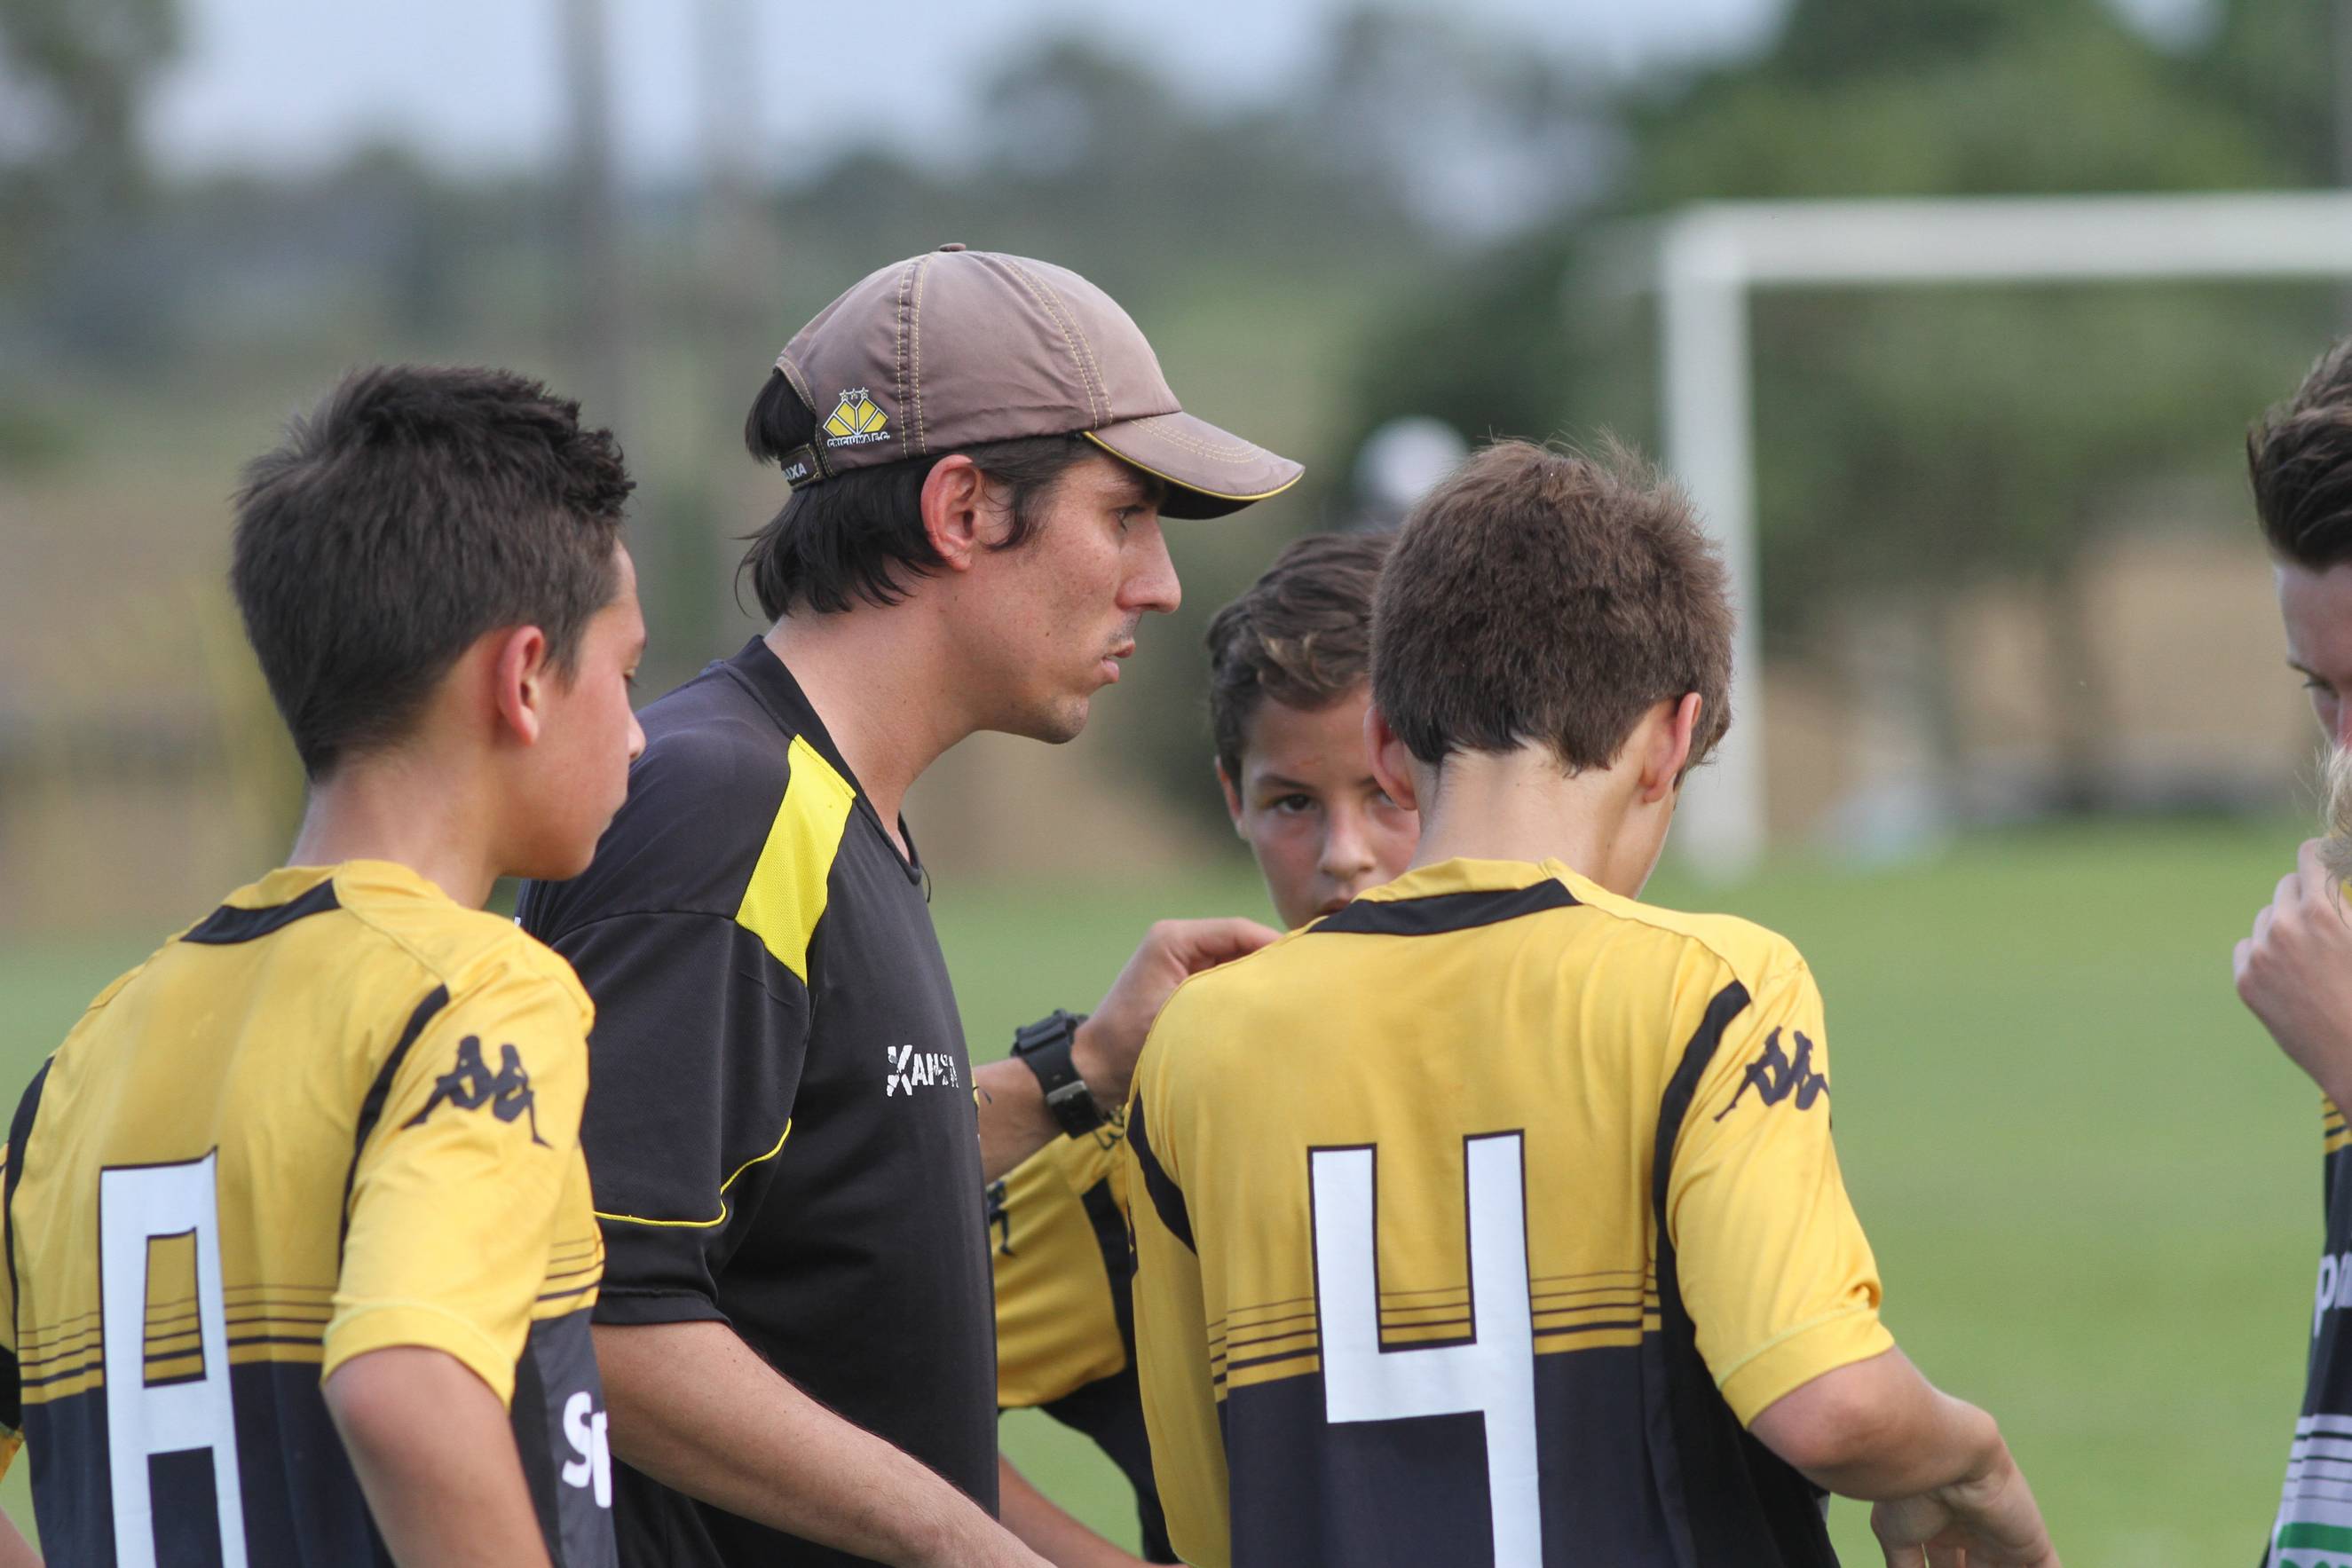 Amauri Barasuol consolida trabalho longevo na equipe sub-17 do Criciúma